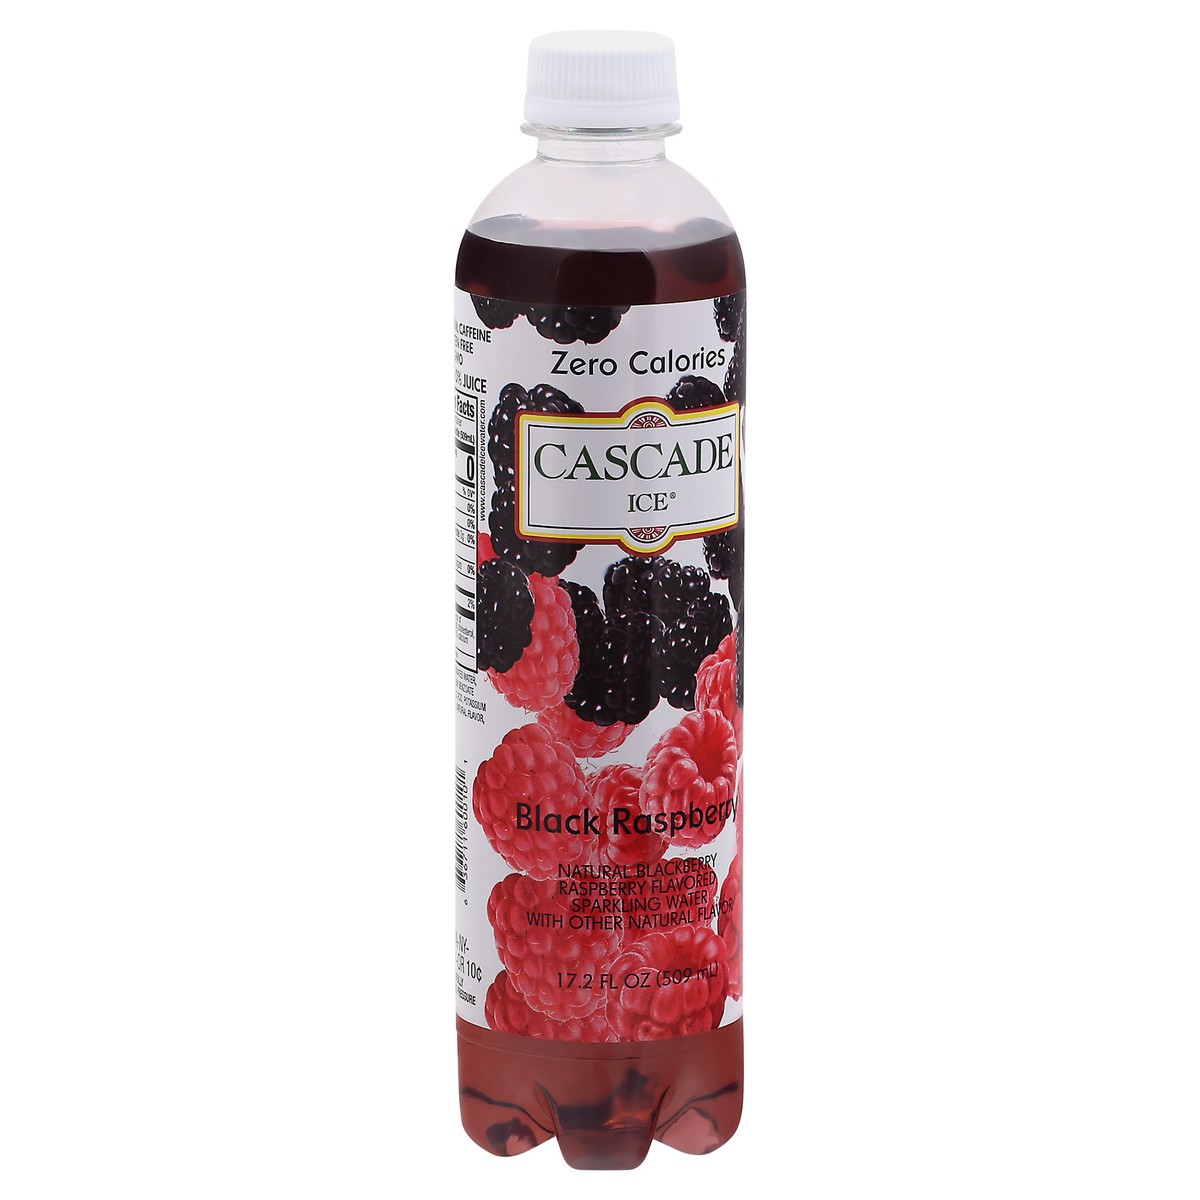 slide 2 of 9, Cascade Ice Zero Calories Black Raspberry Sparkling Water - 17.20 fl oz, 17.2 fl oz